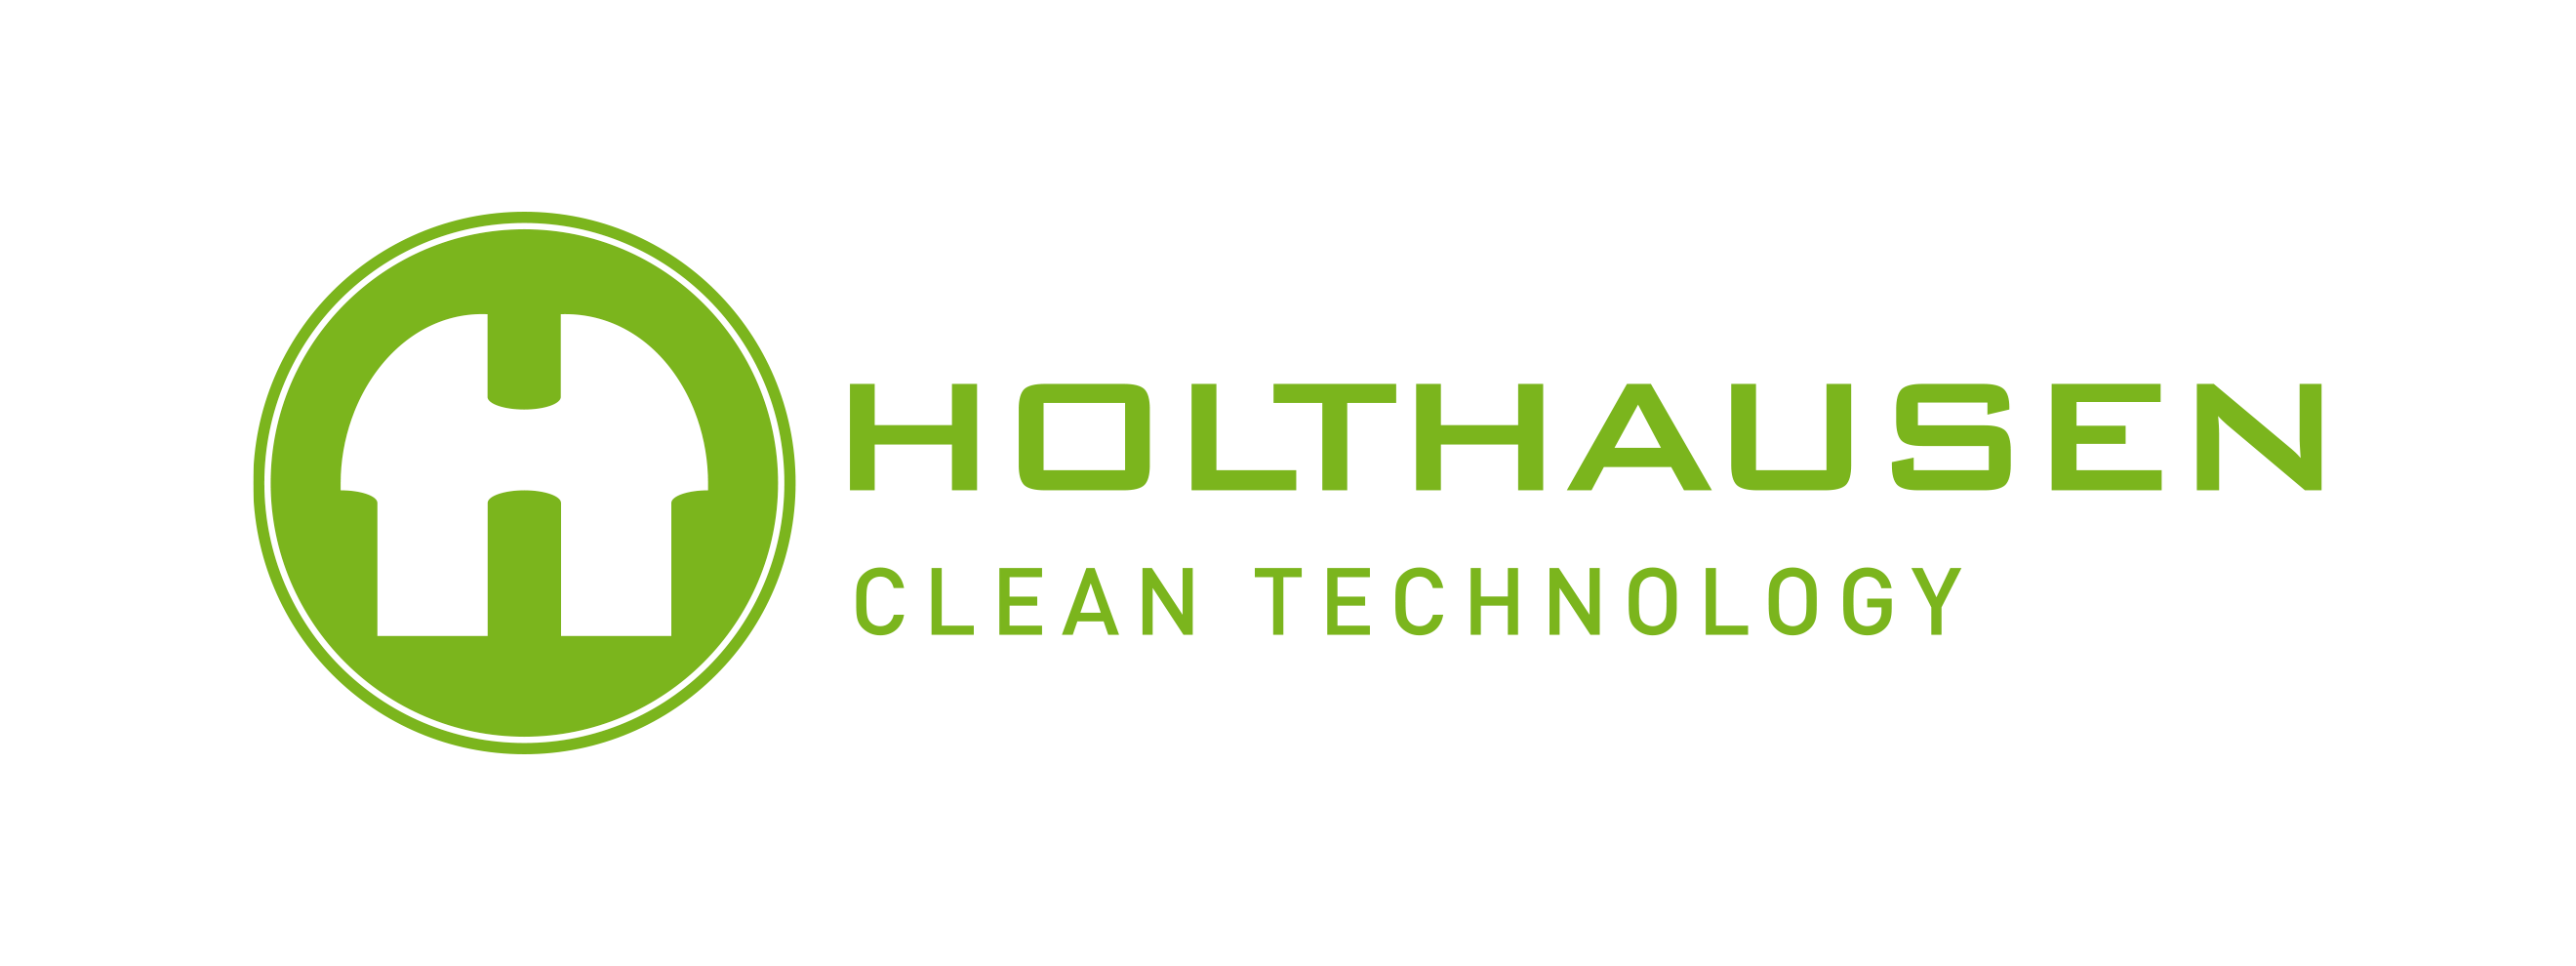 HOLTHAUSEN-CLEAN-TECHNOLOGY-PRIMAIR-POS